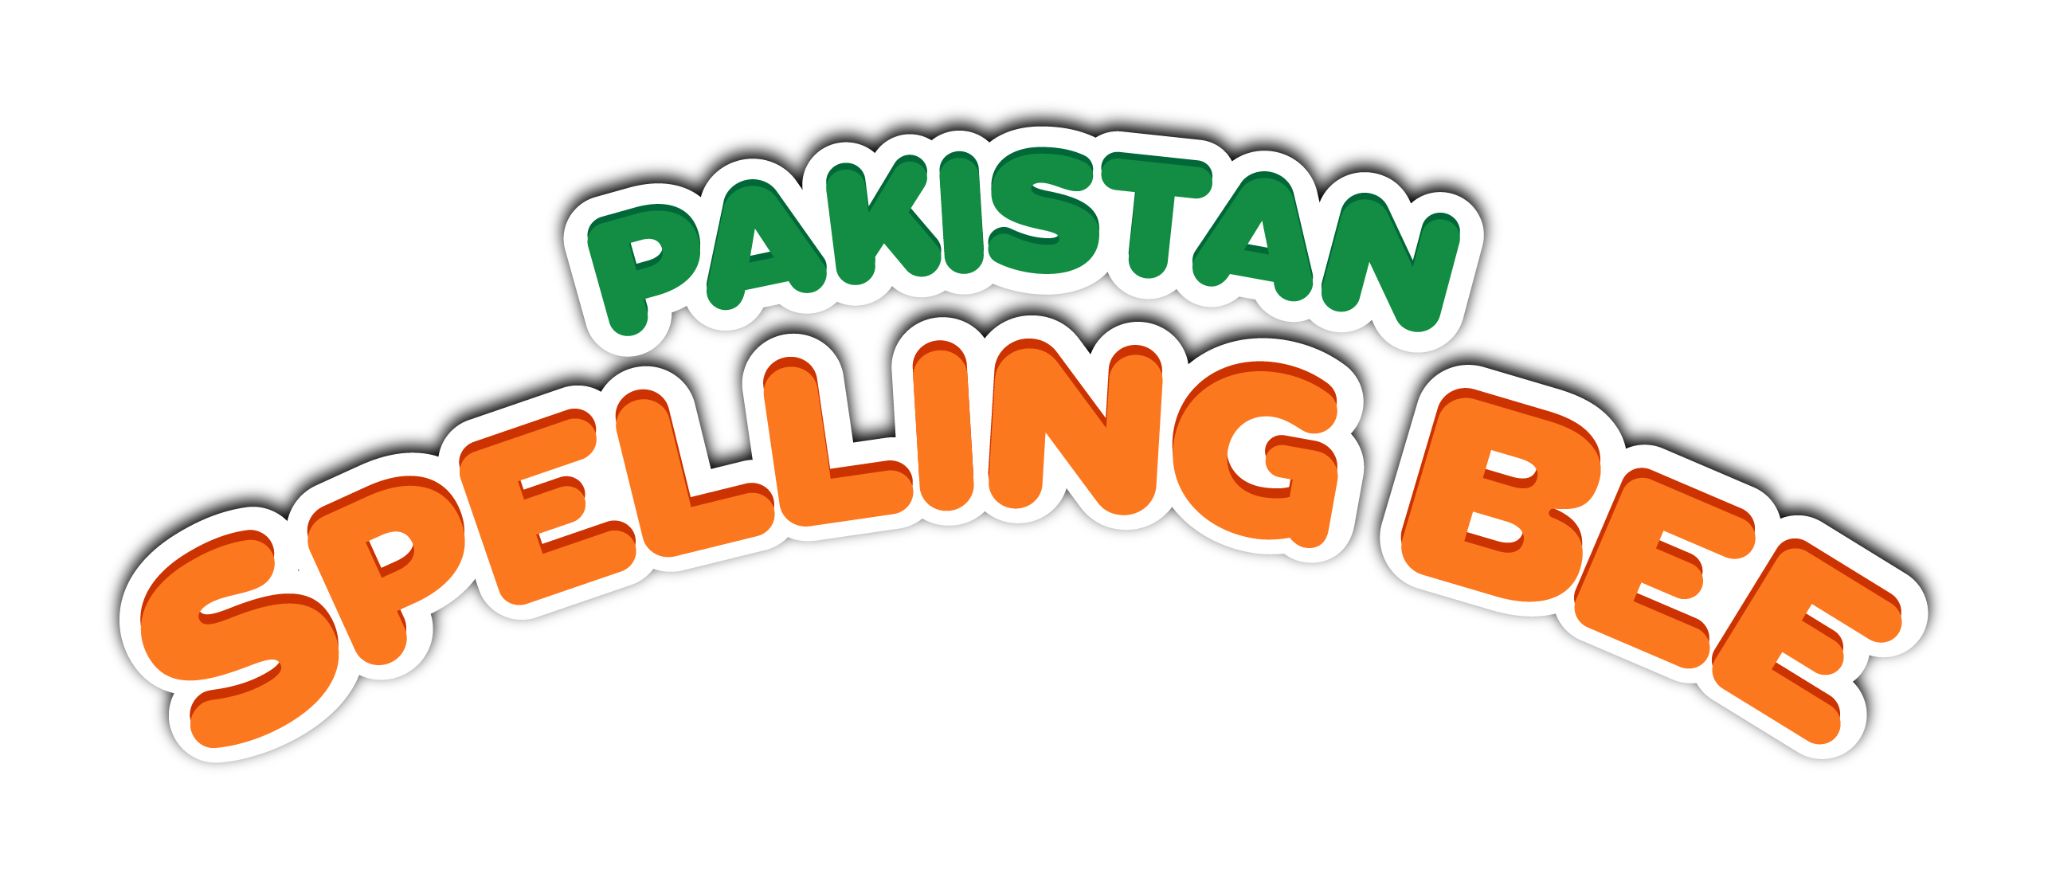 Pakistan Spelling Bee